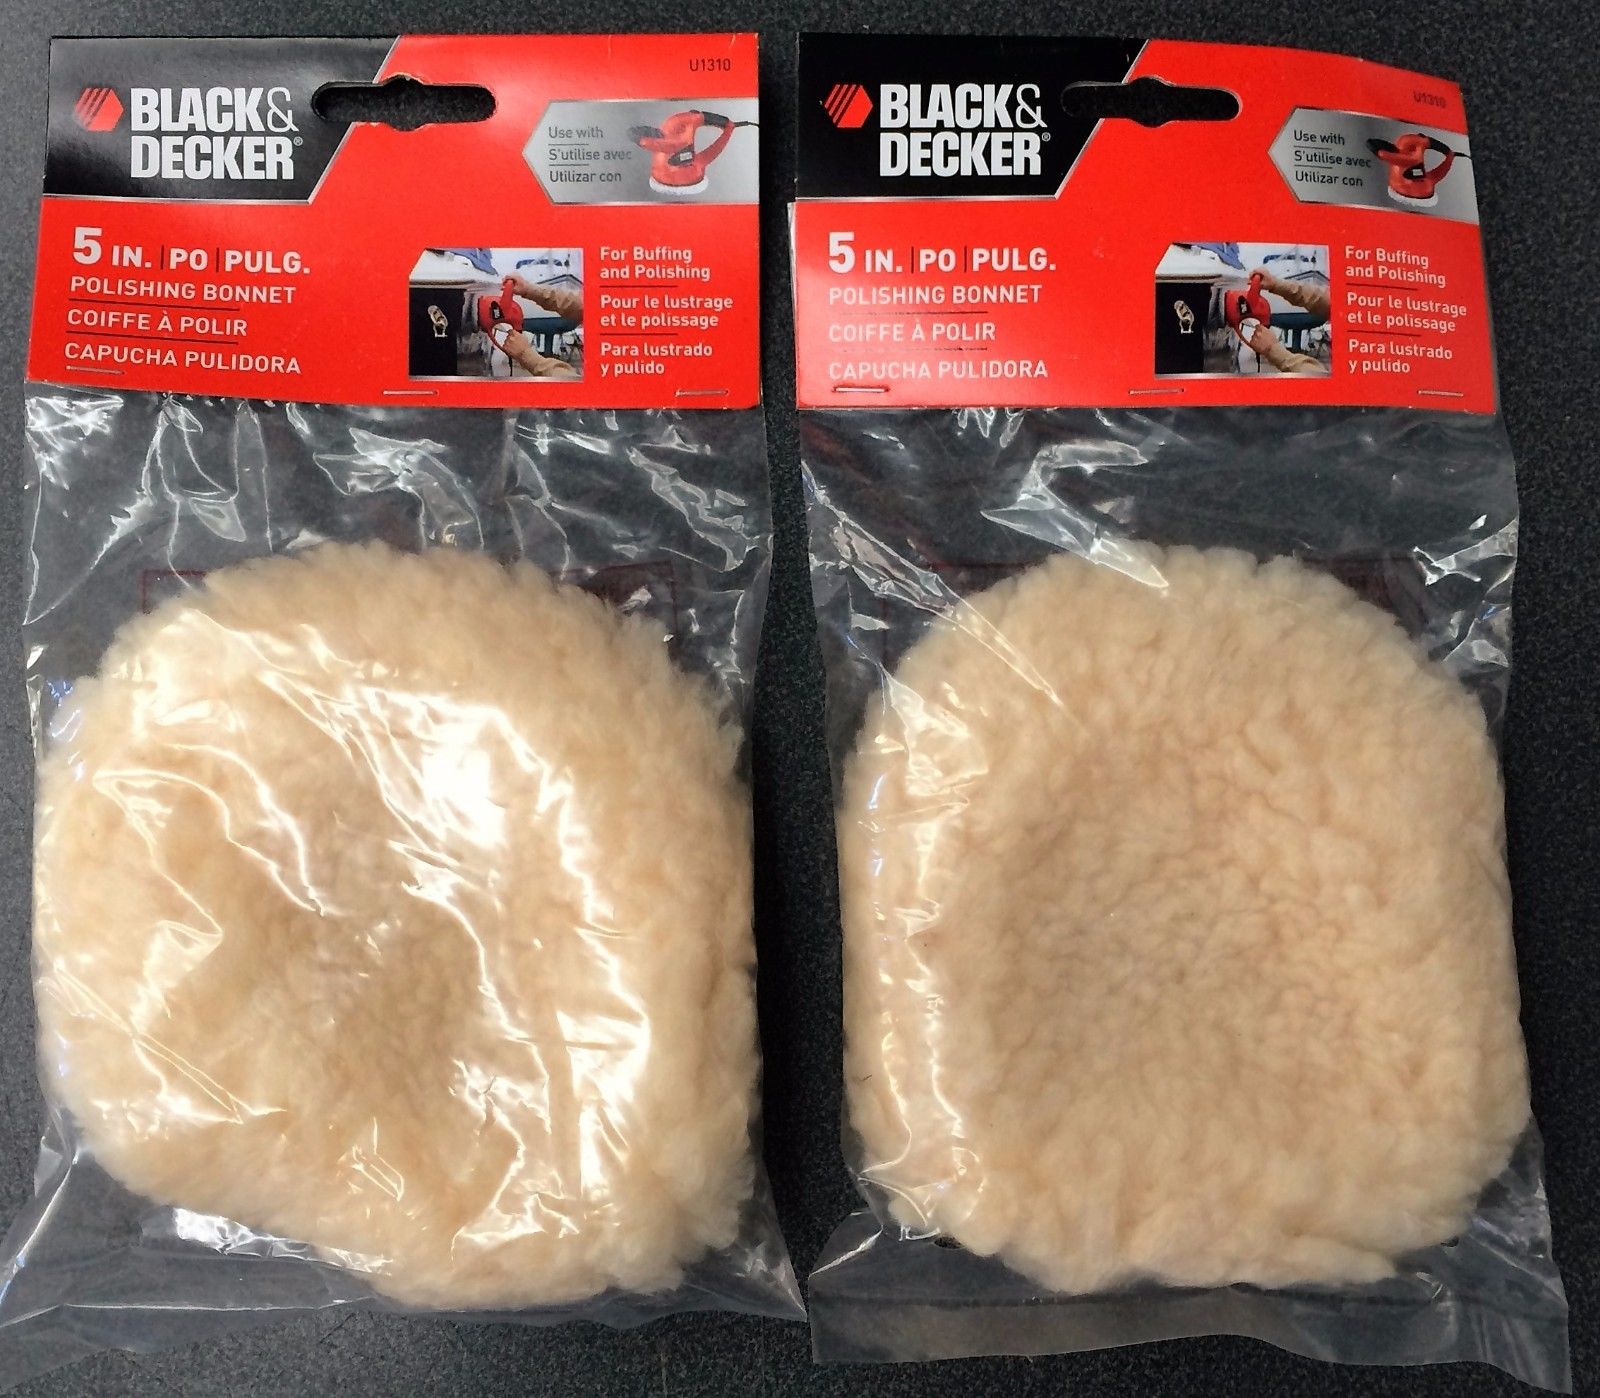 BLACK & DECKER 2-Pack 10-in Polishing Bonnets at